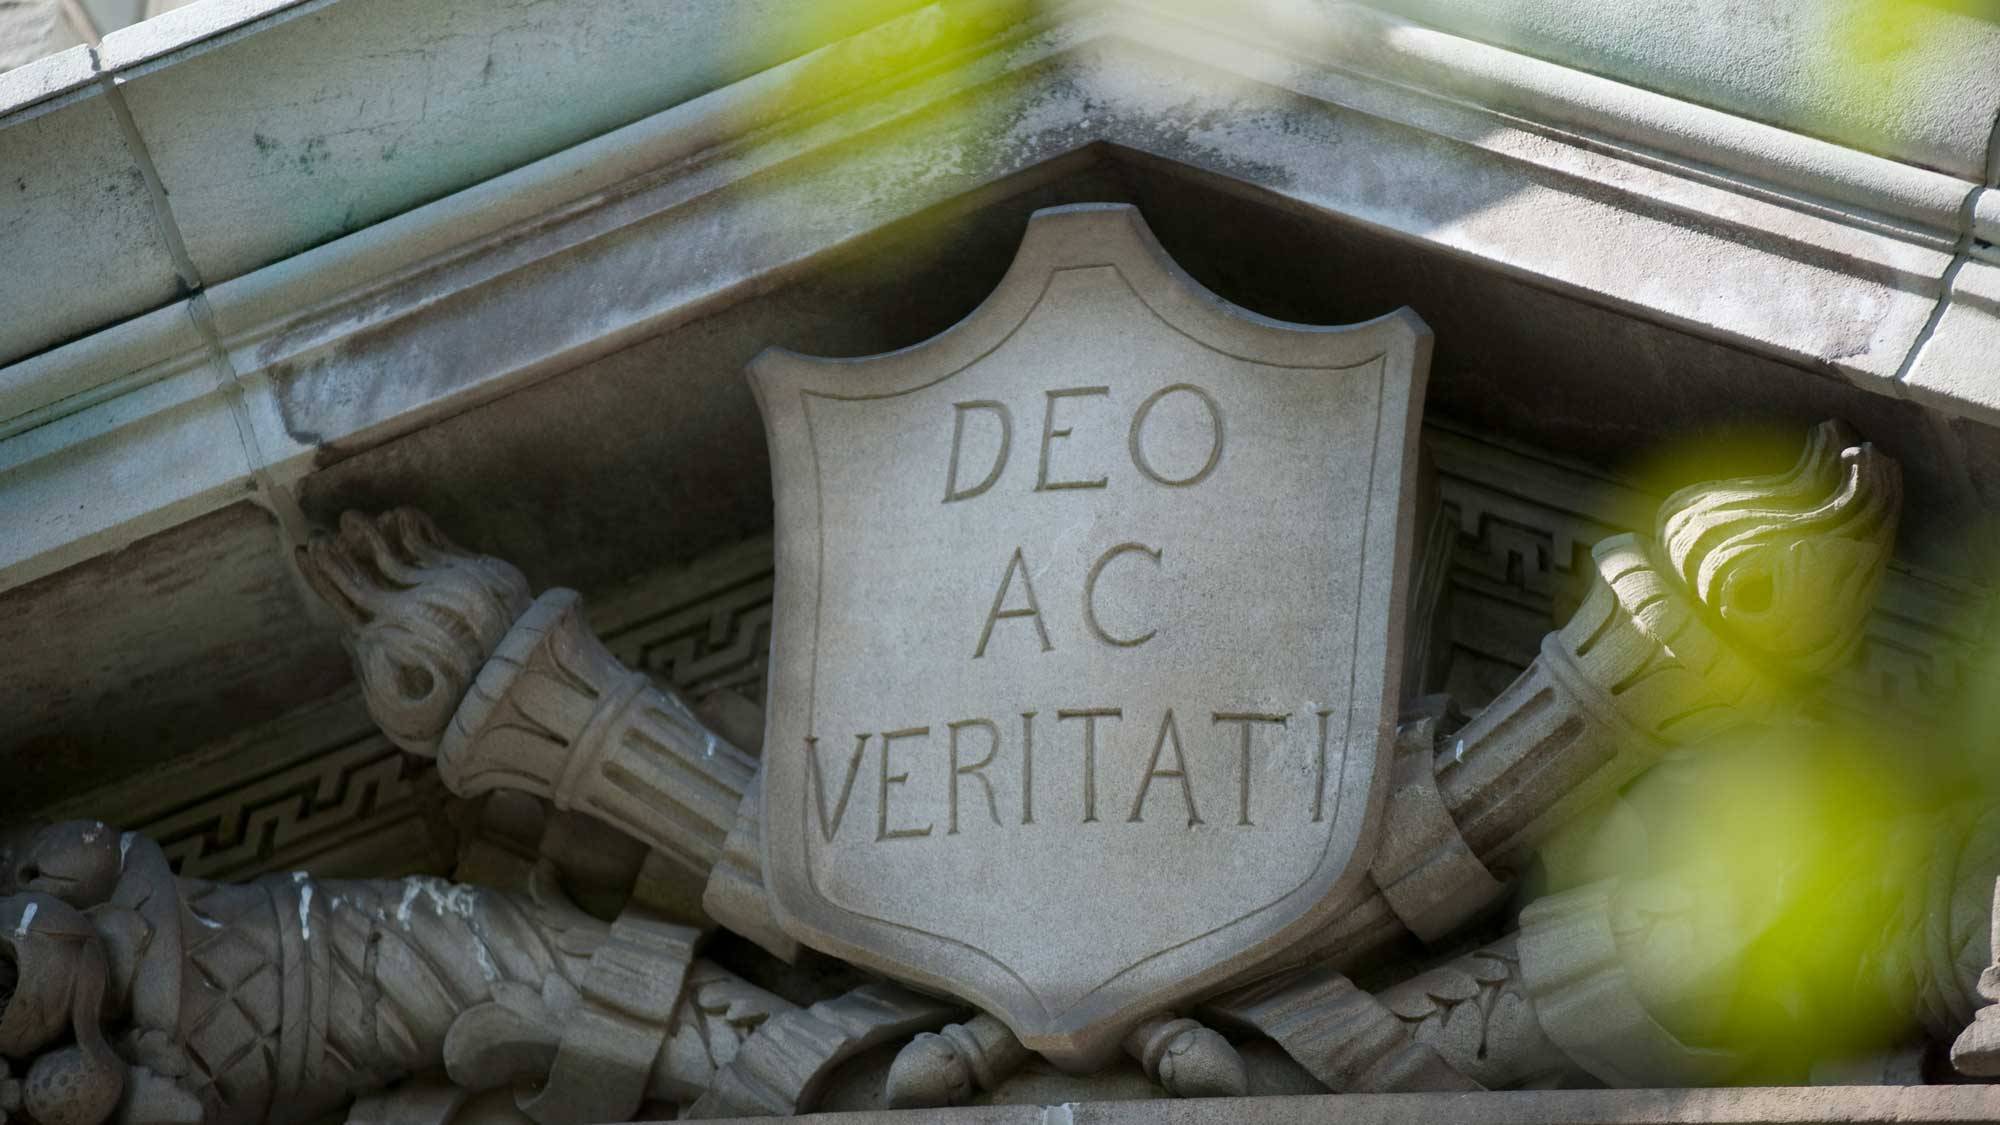 Deo Ac Veritati carved into stone shield